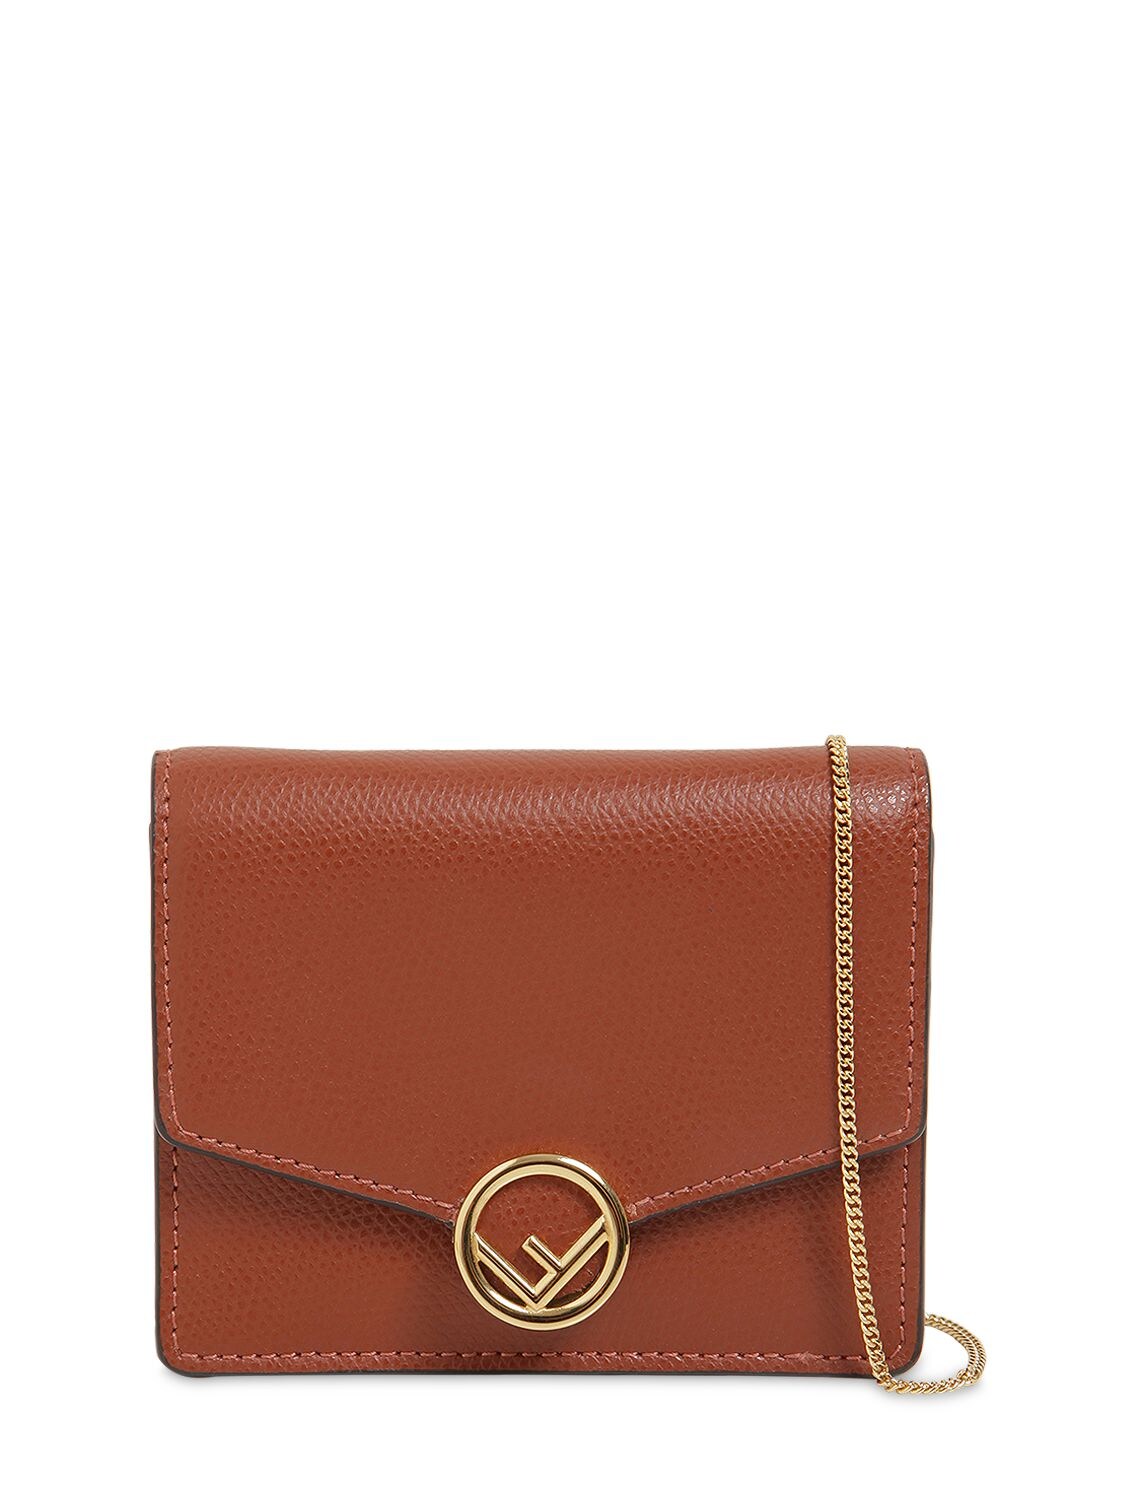 Fendi Micro Leather Card Holder Bag In Rust